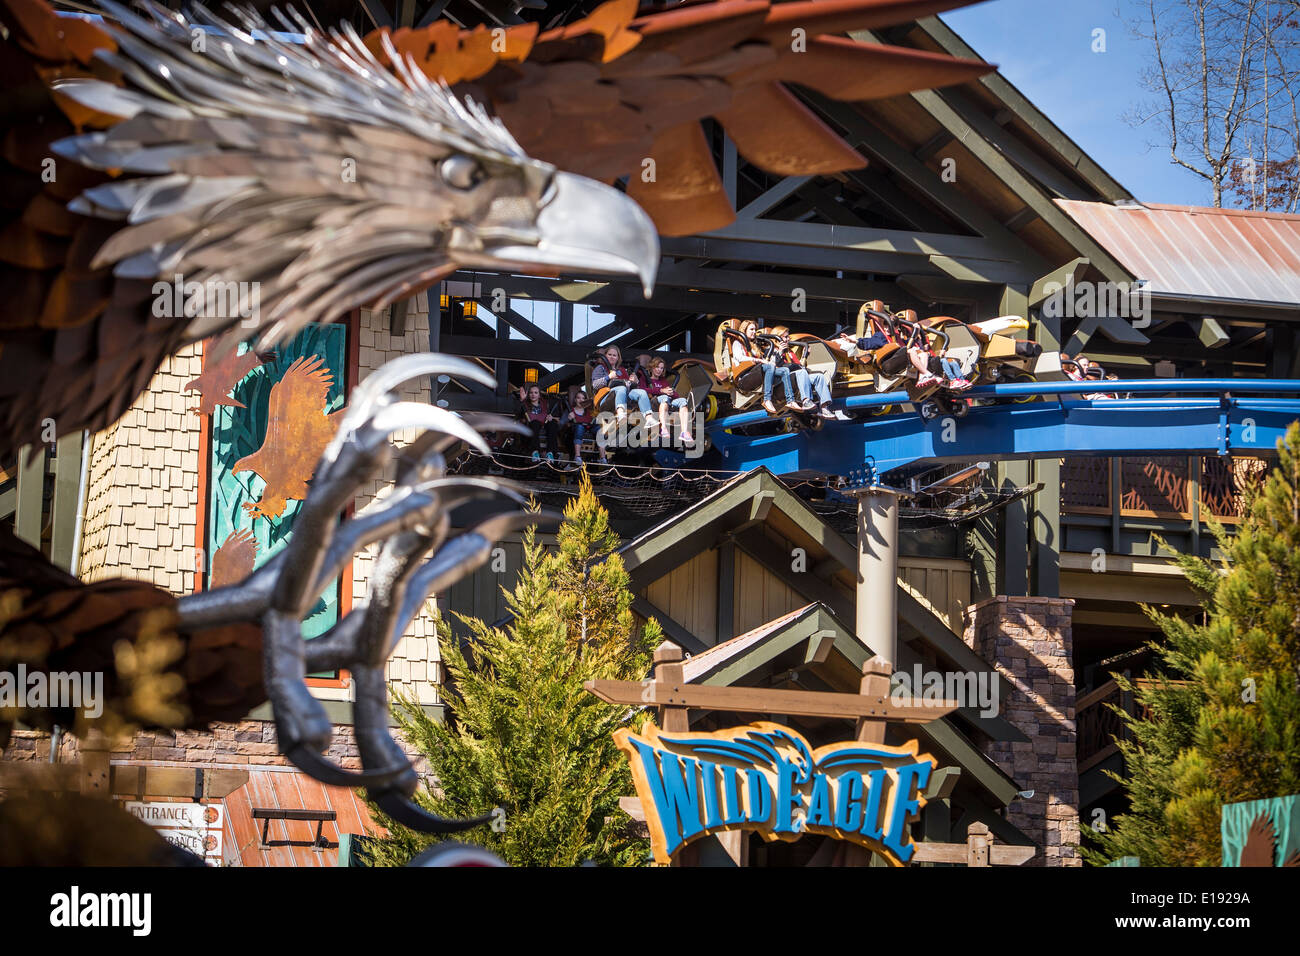 Wild Eagle, Amerikas erste Wing Coaster, ist im Themenpark Dollywood in Pigeon Forge, Tennessee abgebildet. Stockfoto